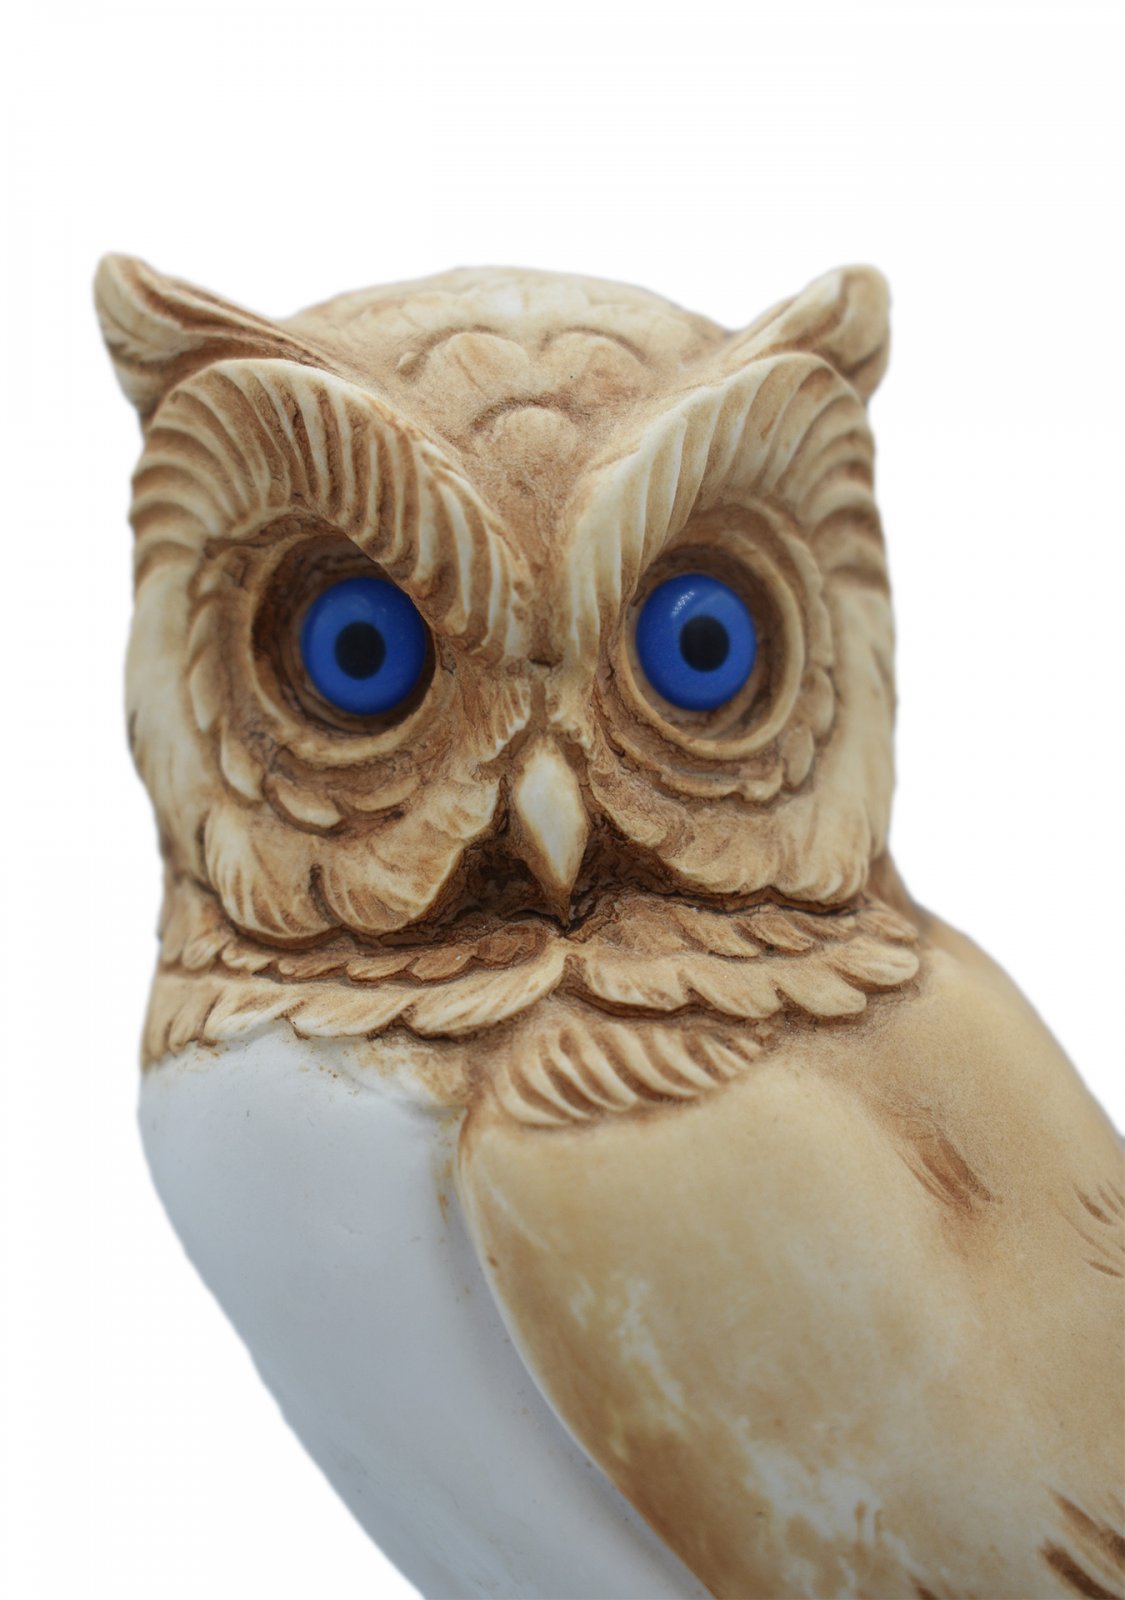 Owl medium alabaster statue with color, the symbol of wisdom